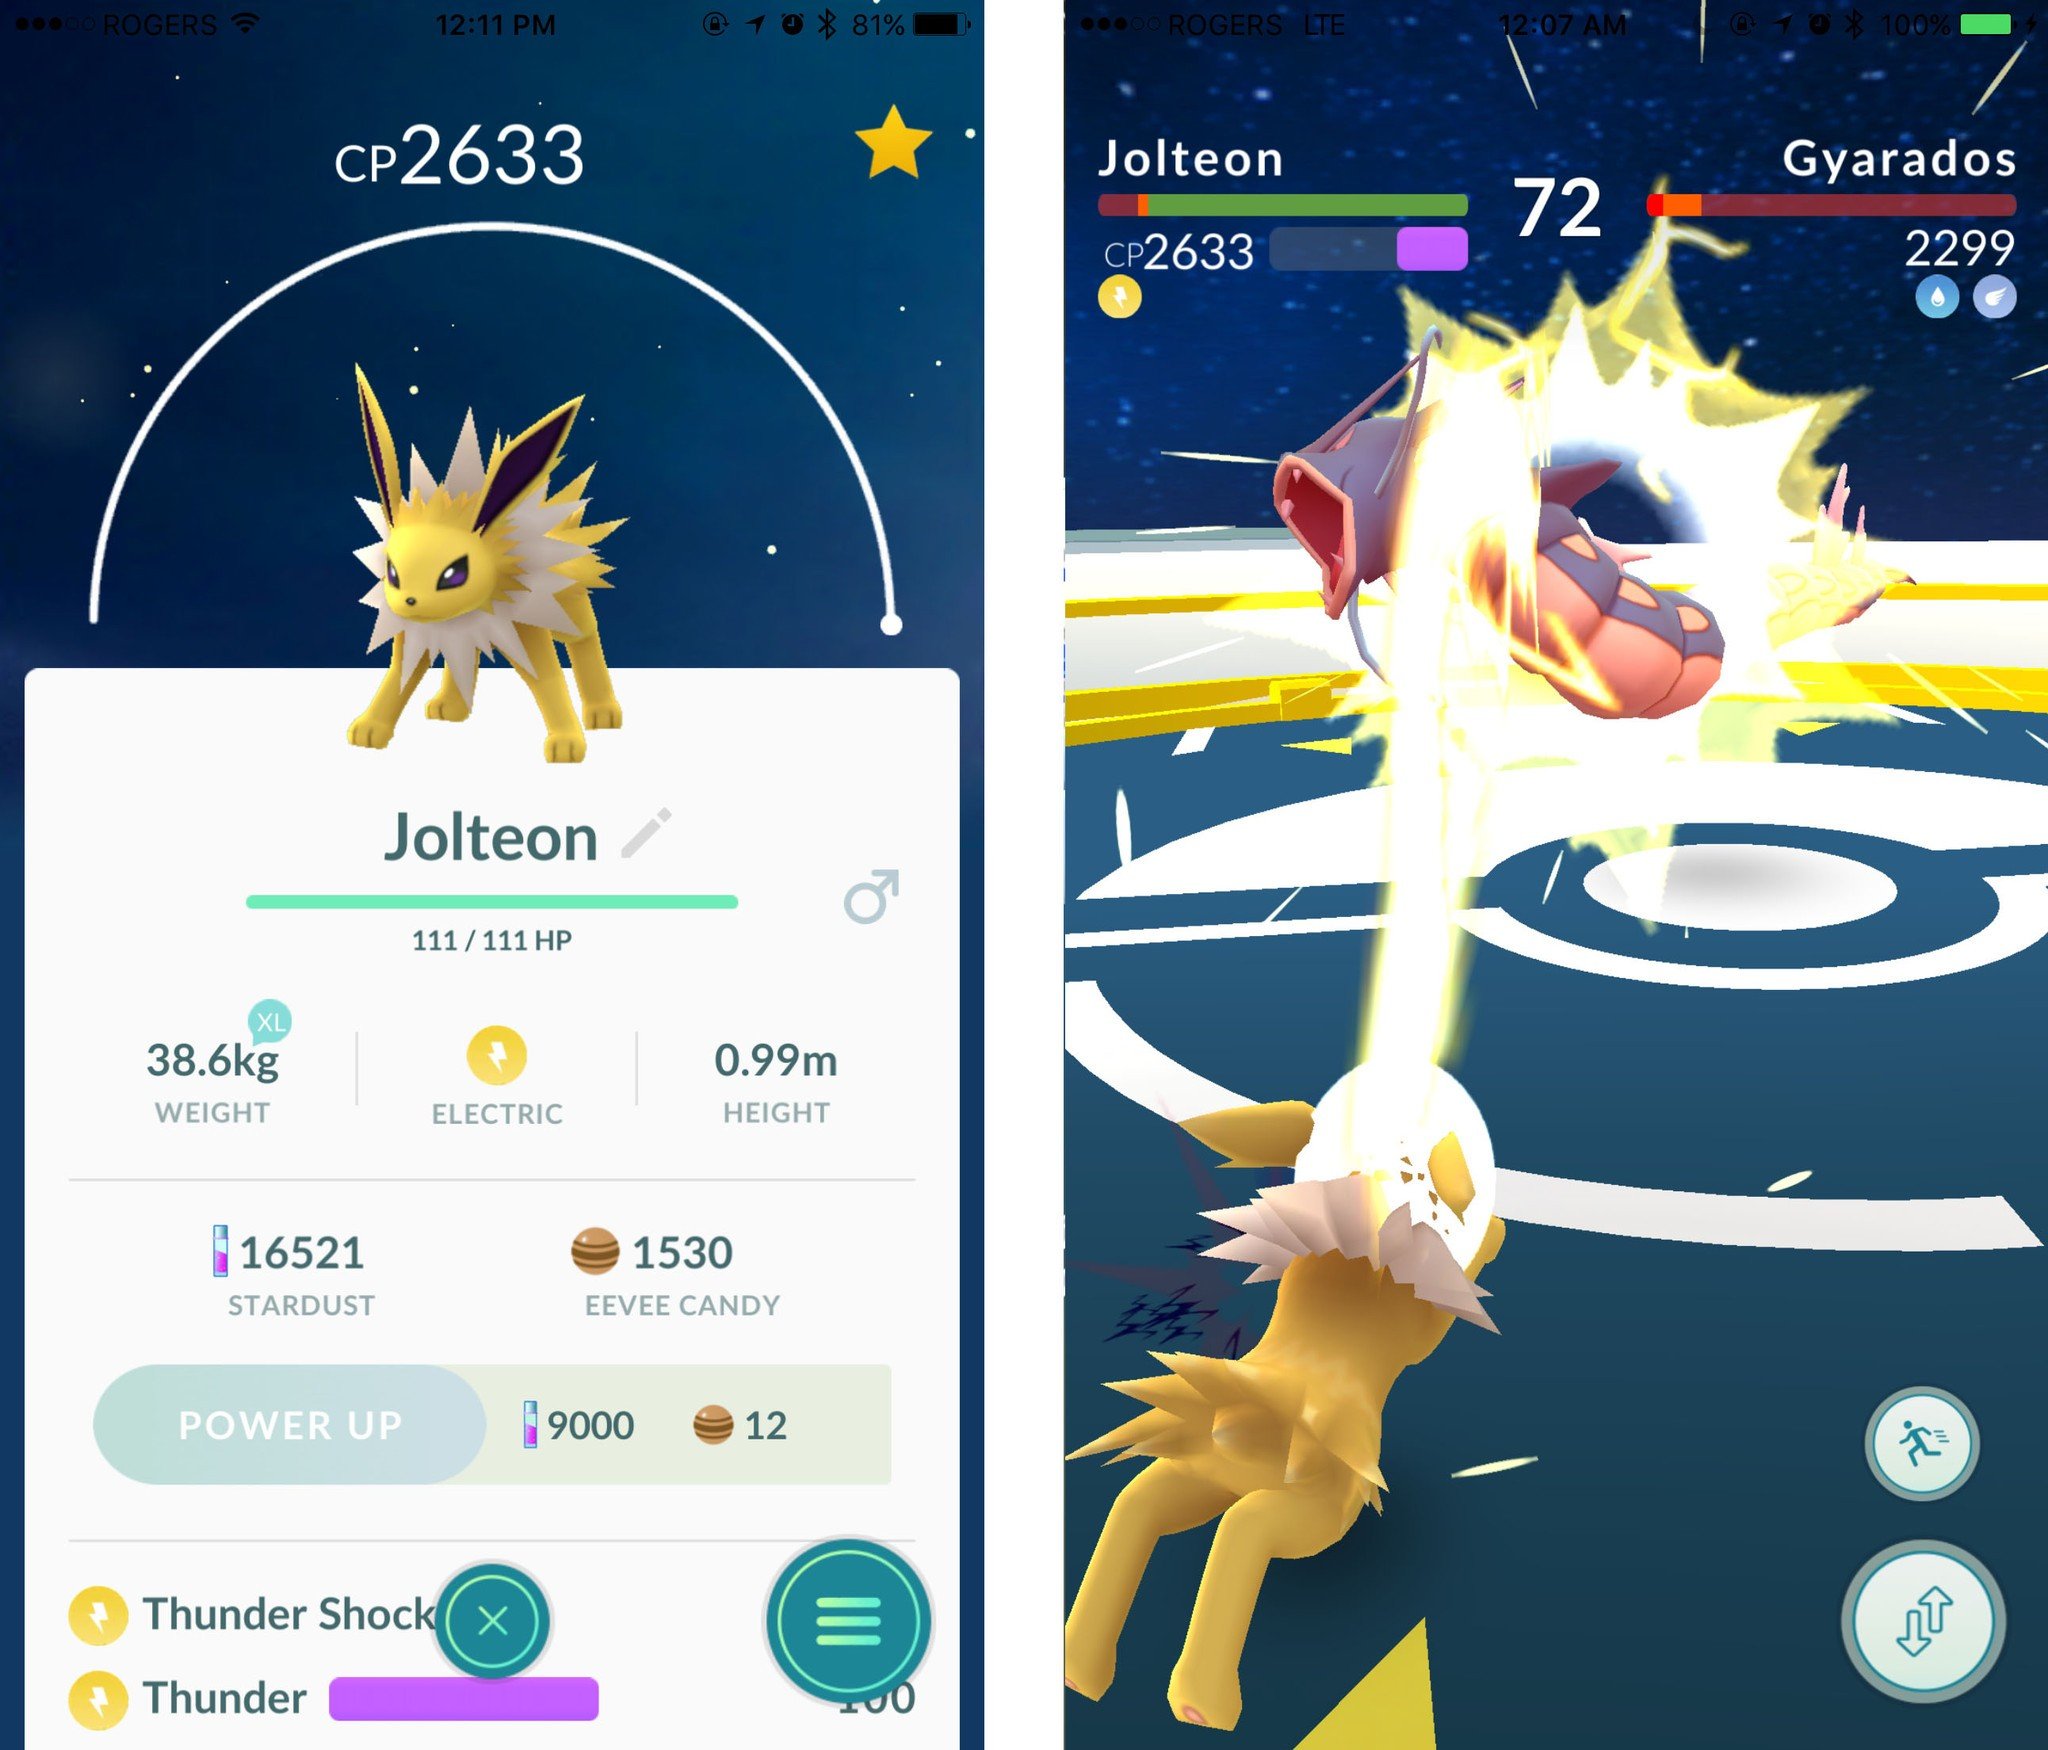 Image result for pokemon go jolteon vs gyarados